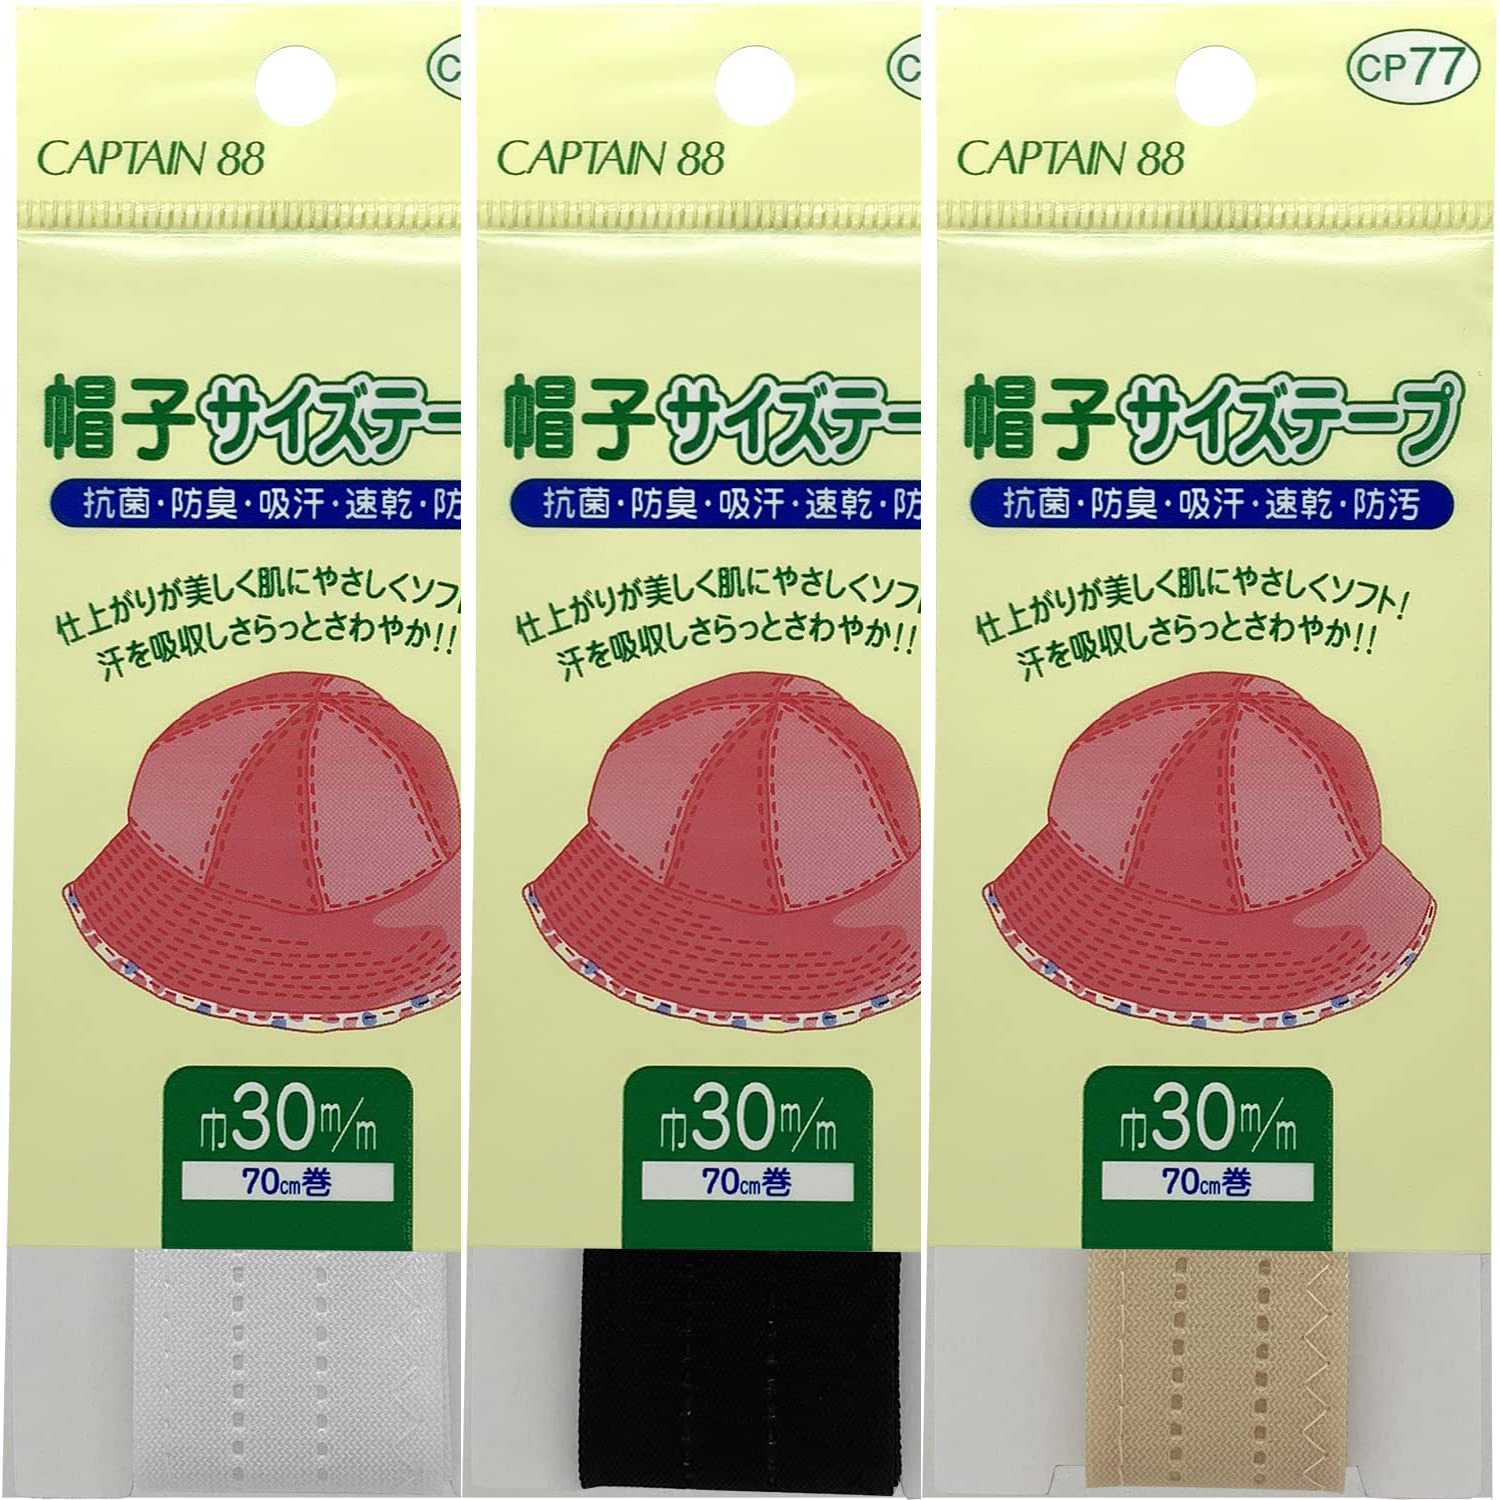 CP77 帽子サイズテープ 30mm巾 70cm 1枚 (枚)